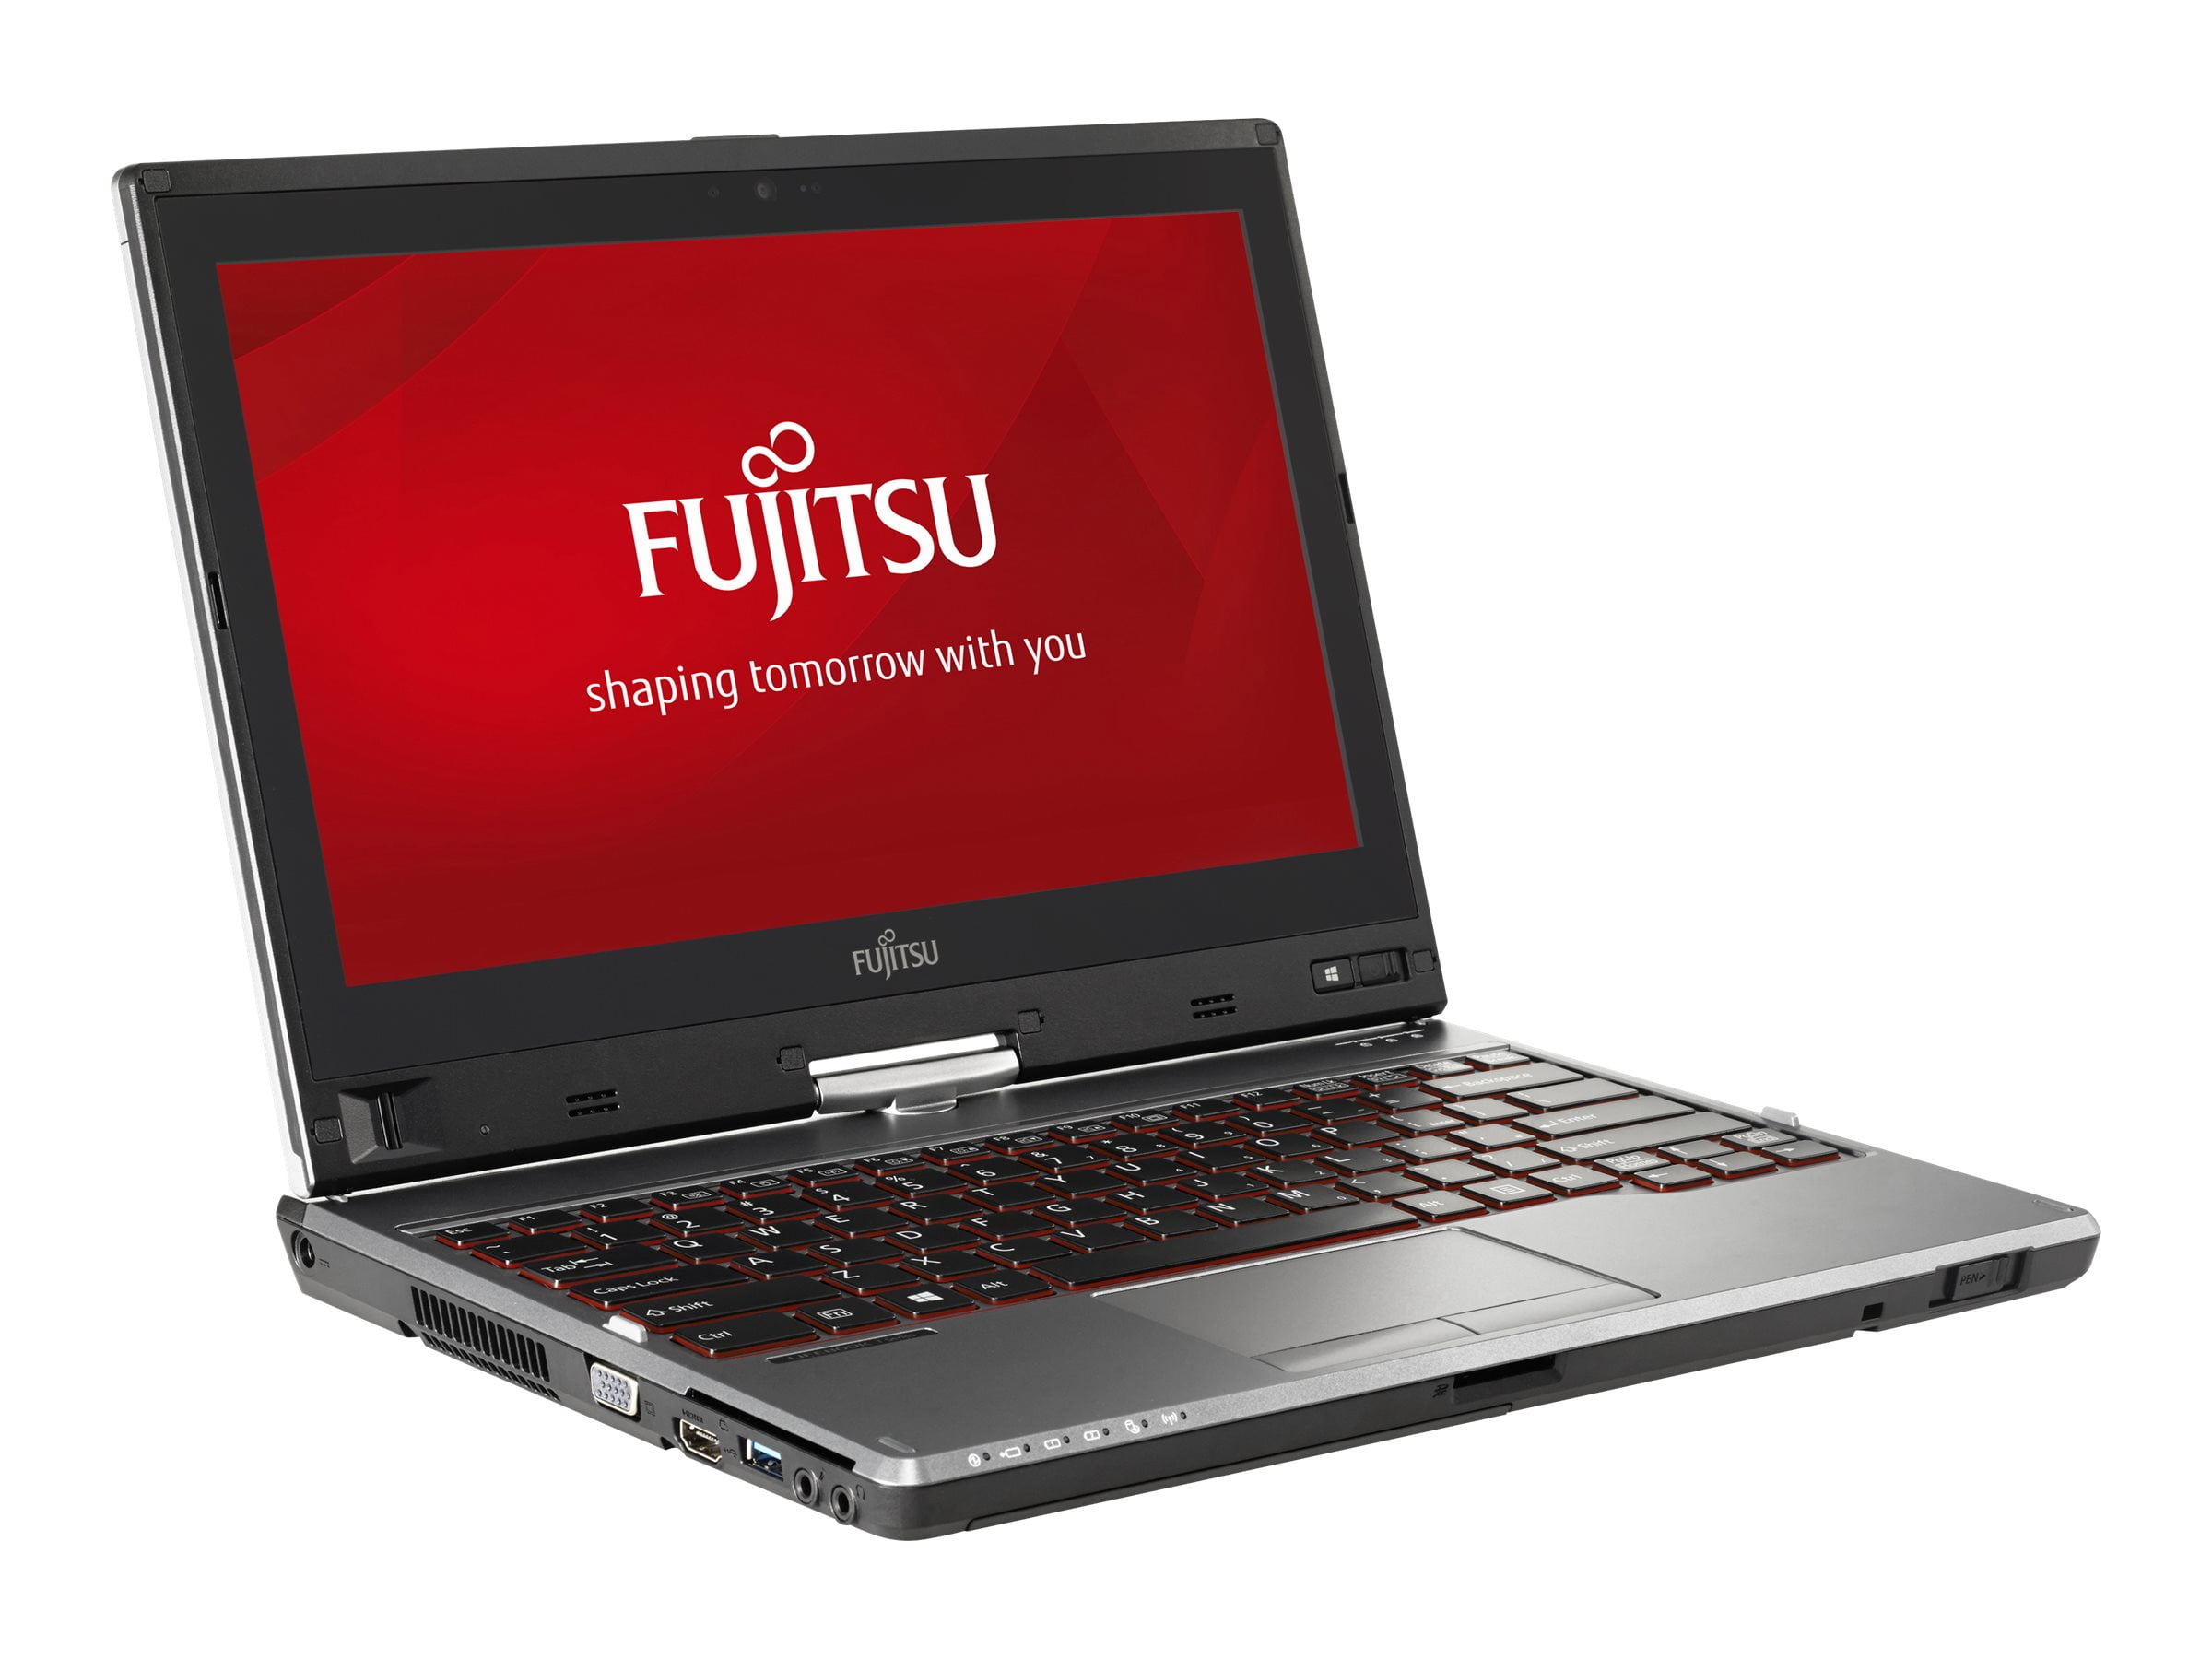 Fujitsu LIFEBOOK T725 - Convertible - Intel Core i5 - 5200U / up to 2.7 GHz  - Win 7 Pro 64-bit (includes Win 8.1 Pro 64-bit License) - HD Graphics 